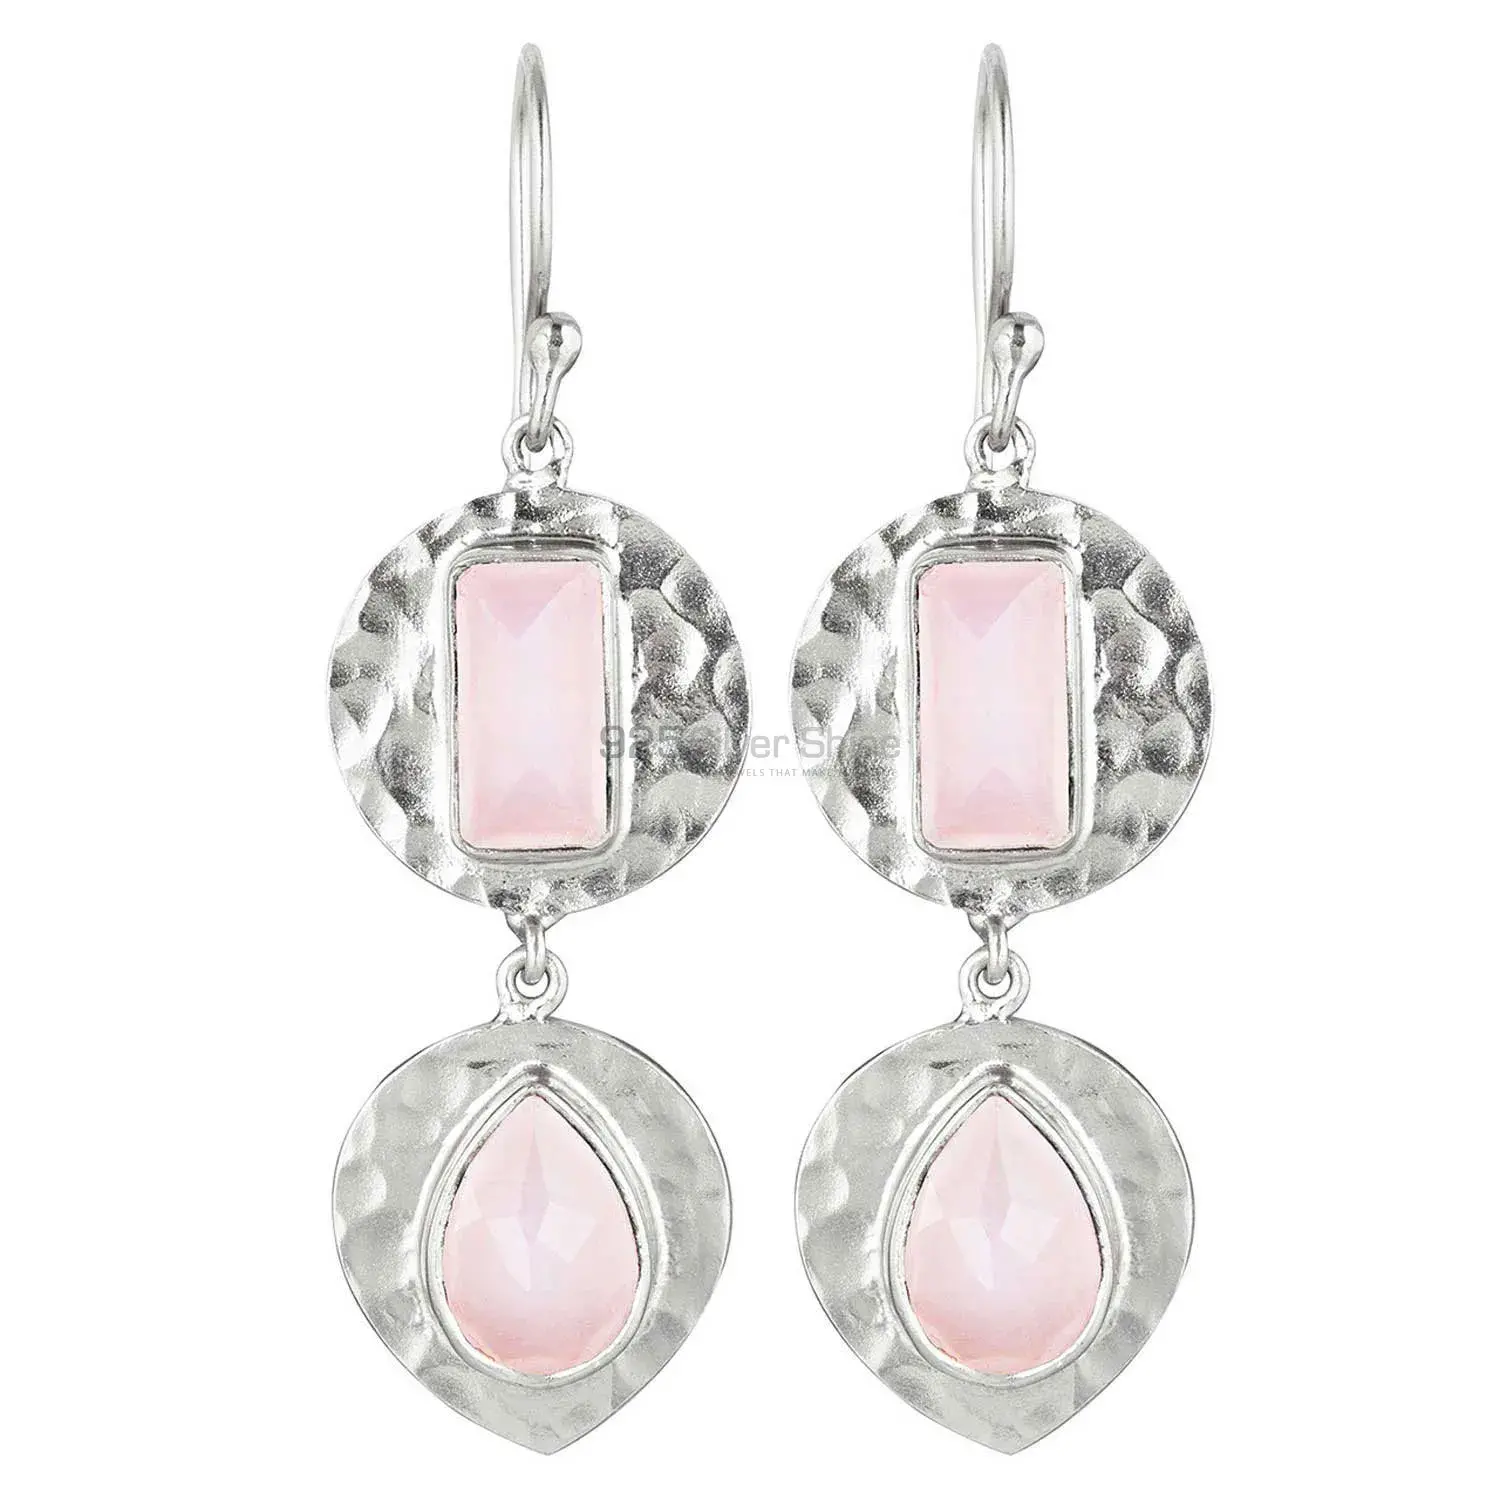 Beautiful 925 Sterling Silver Handmade Earrings Exporters In Rose Quartz Gemstone Jewelry 925SE1833